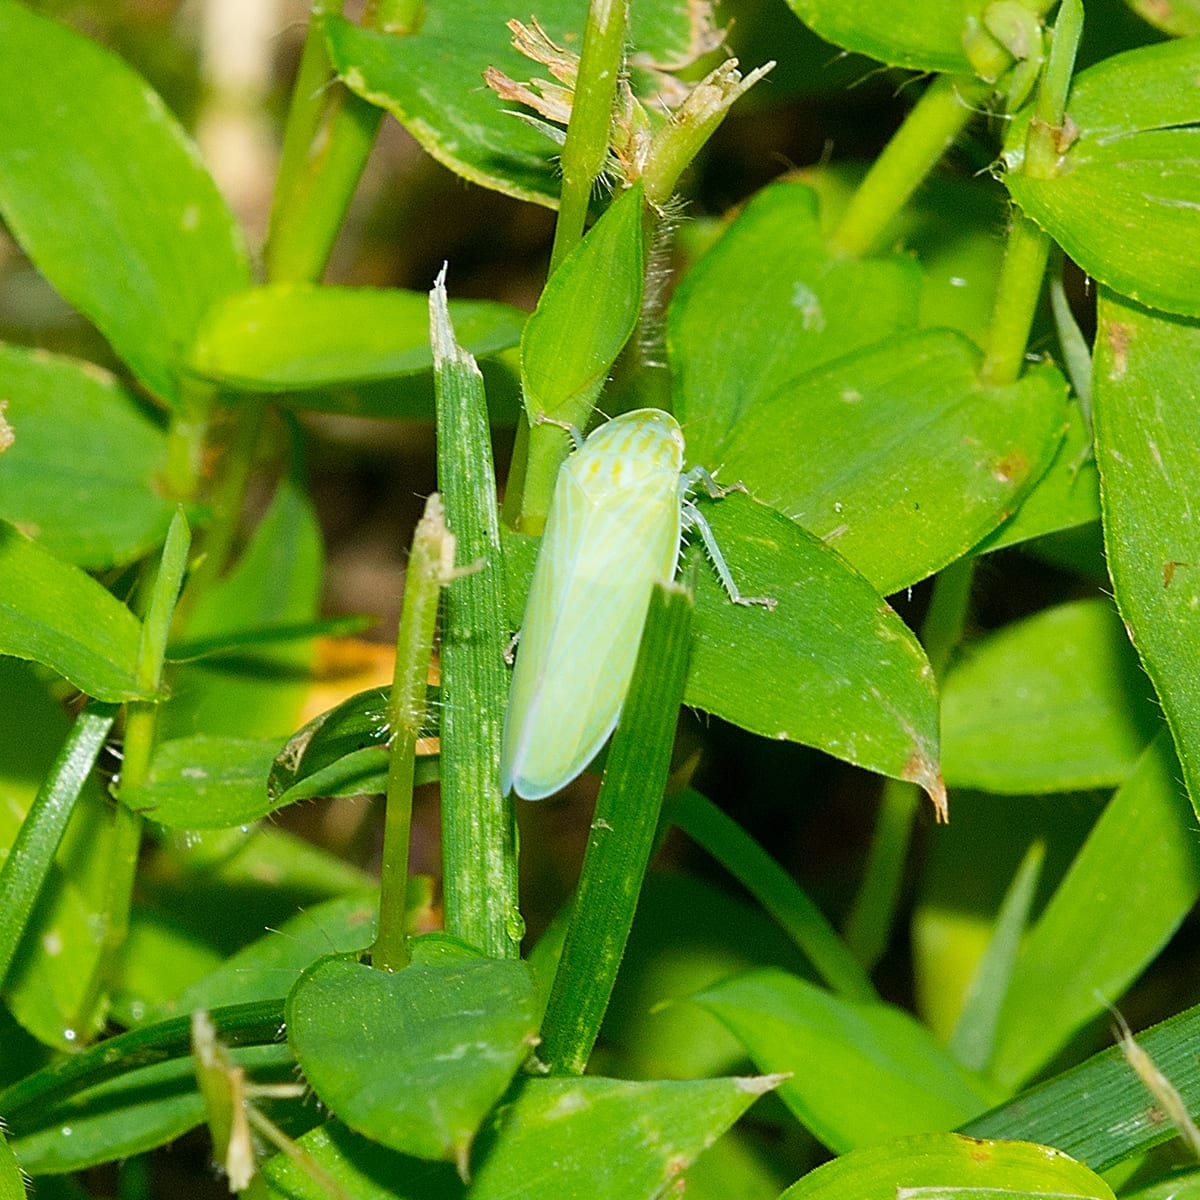 The Leaf Hopper Nymph